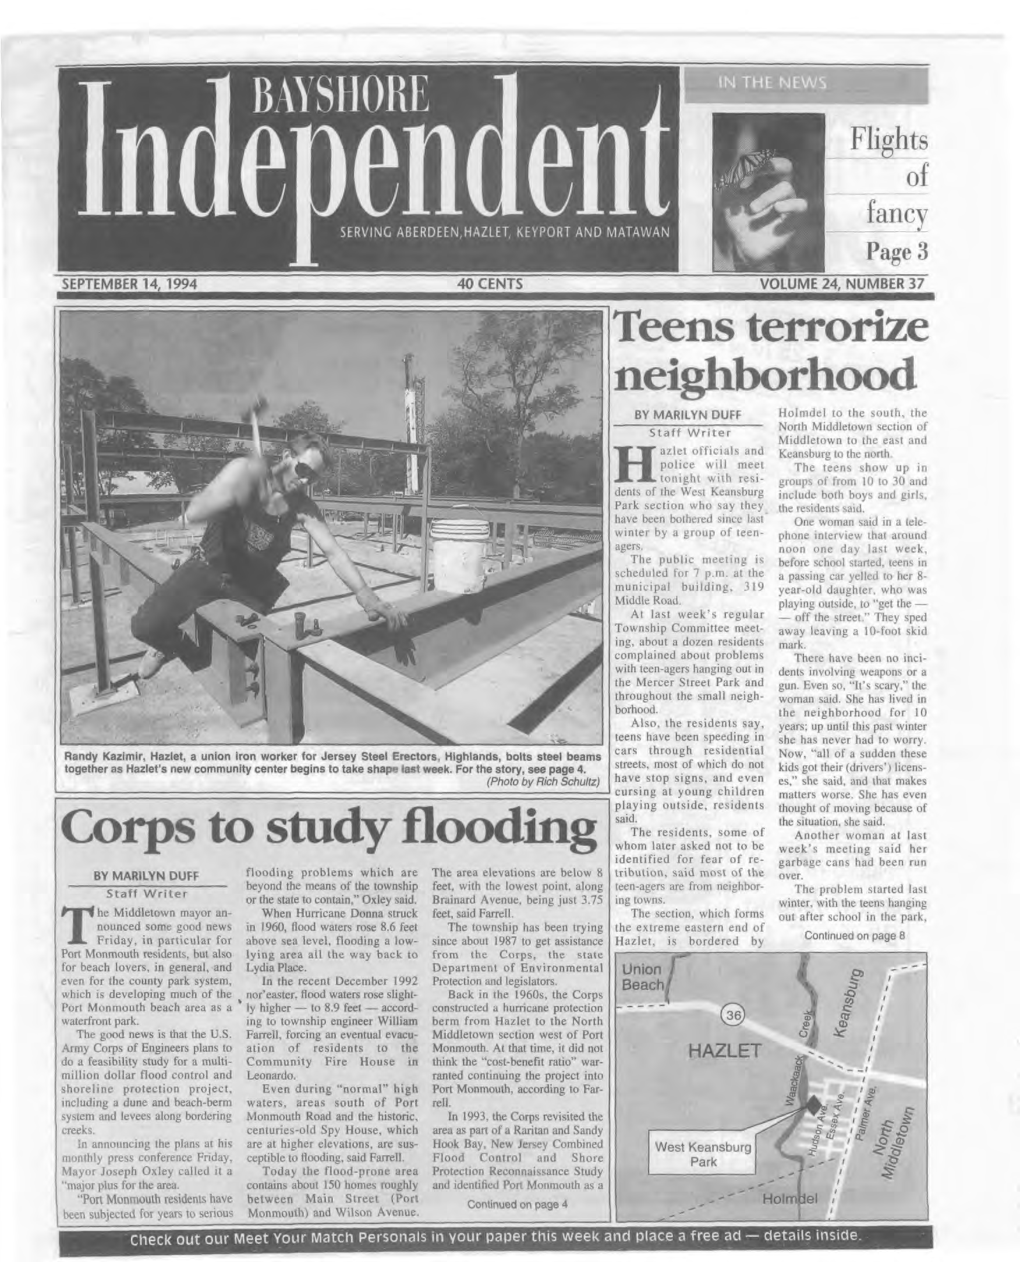 Teens Terrorize Neighborhood Corps to Study Flooding